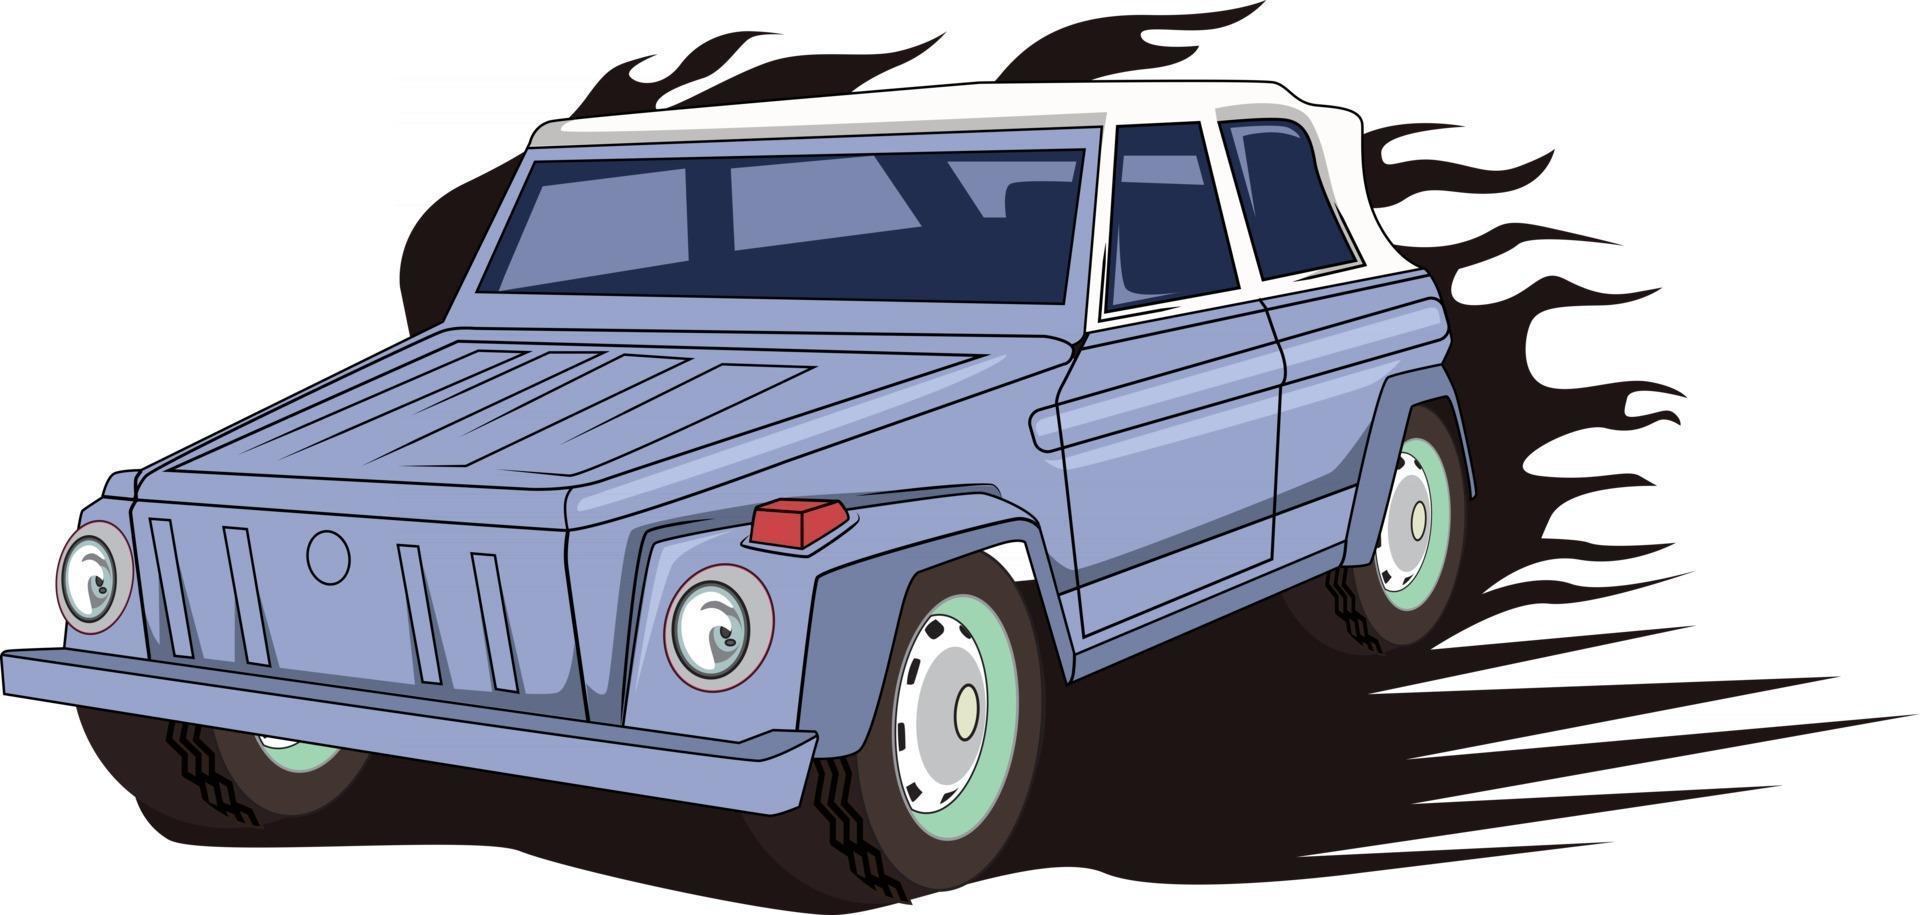 the classic car illustration vector